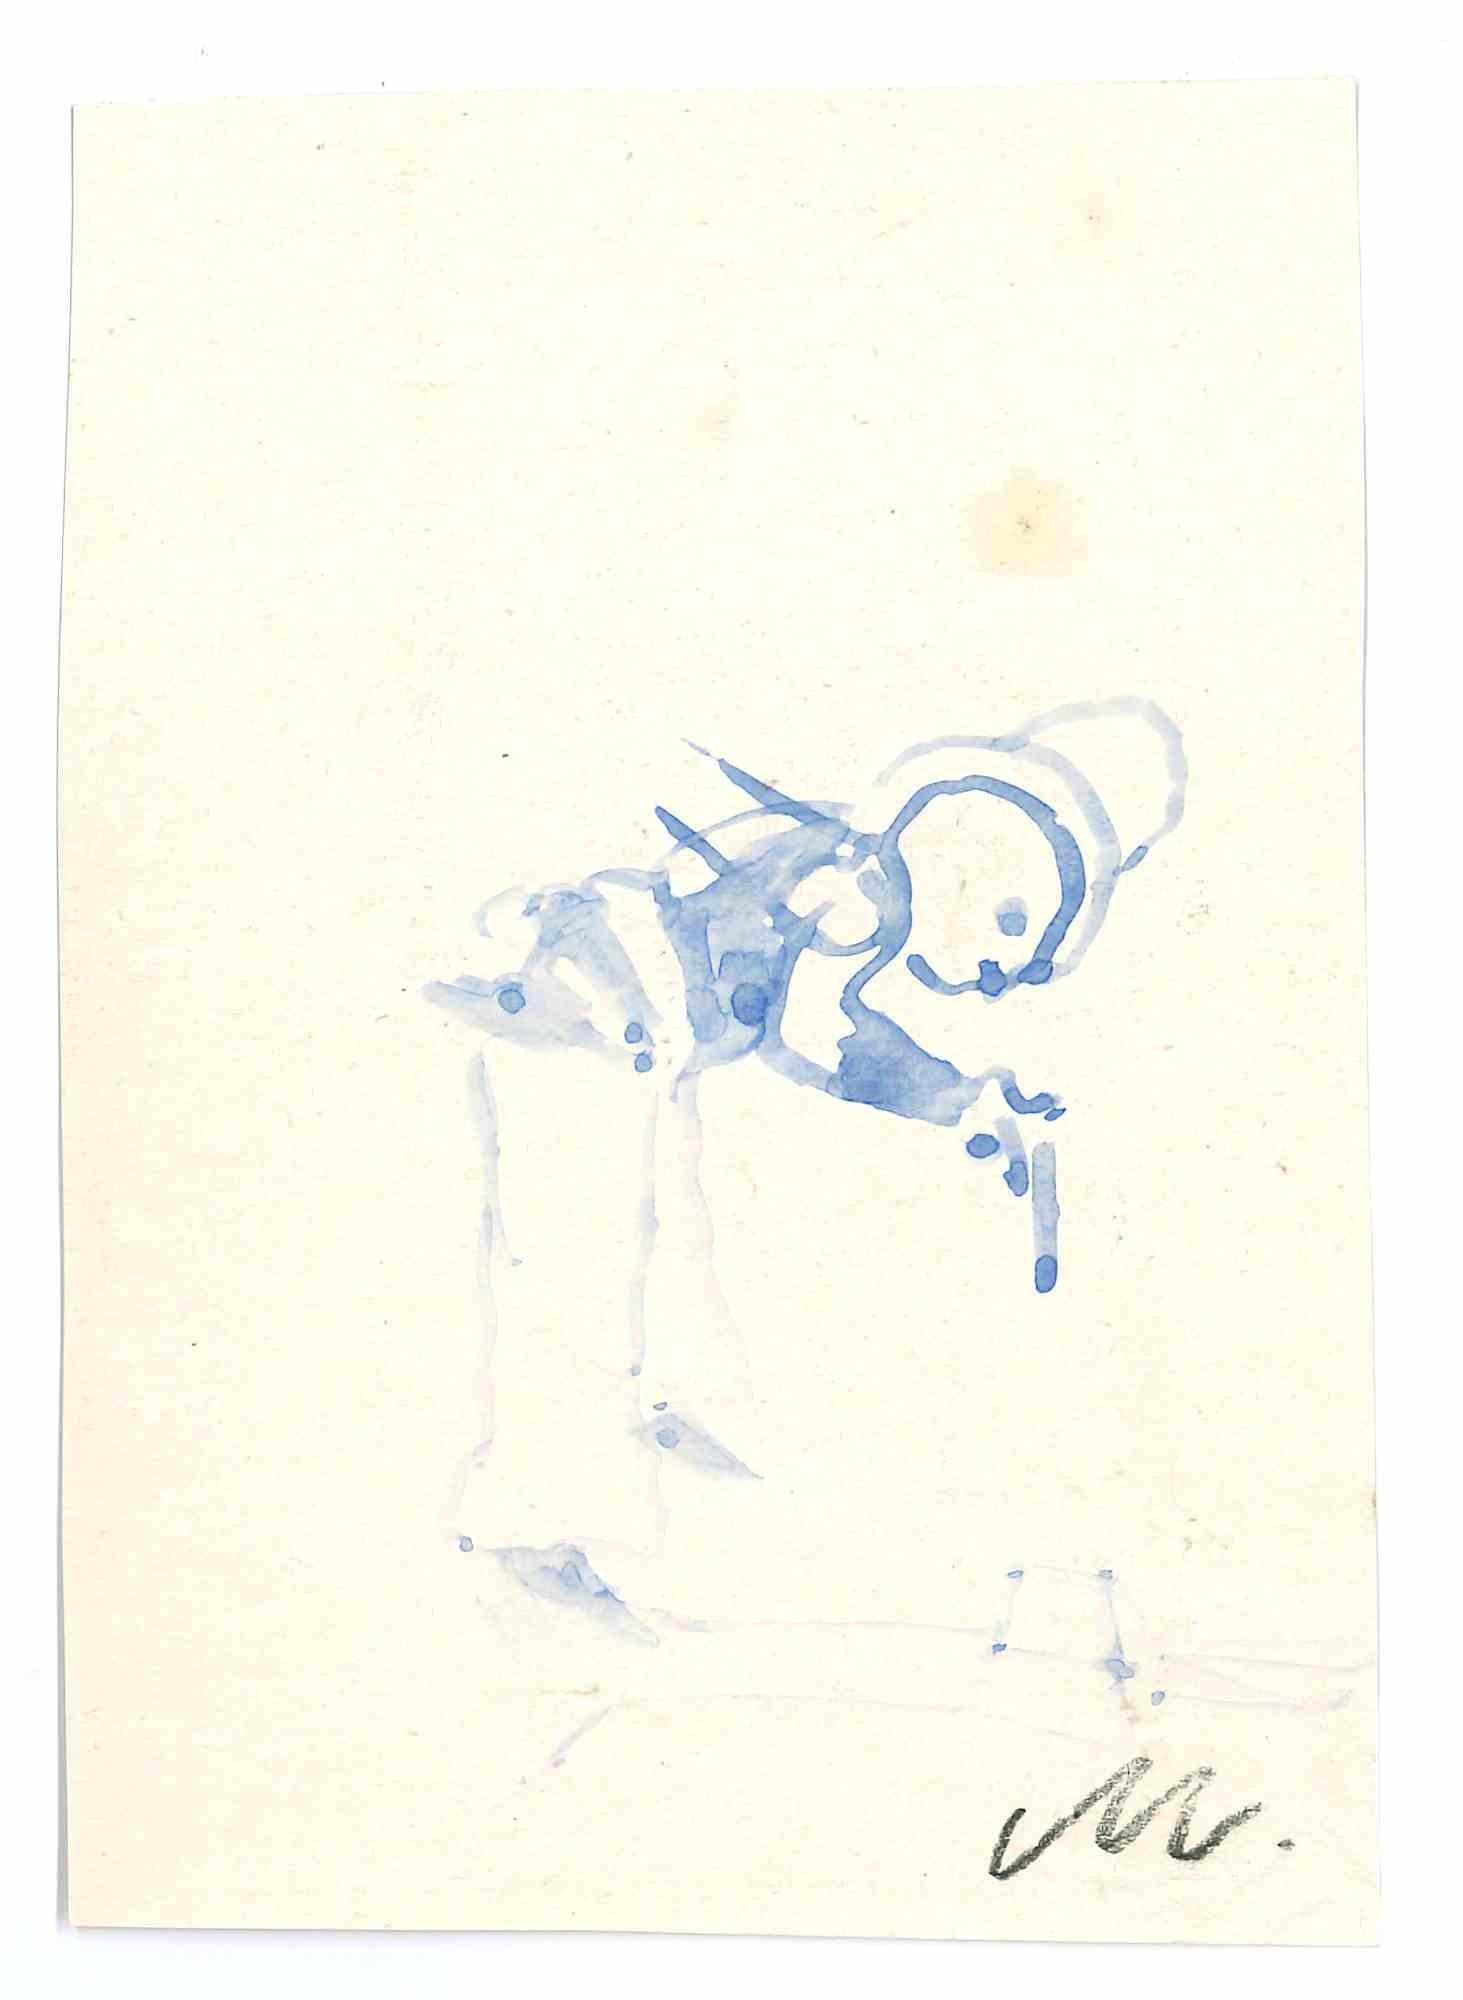 The Shoot  - Drawing by Mino Maccari - 1960s